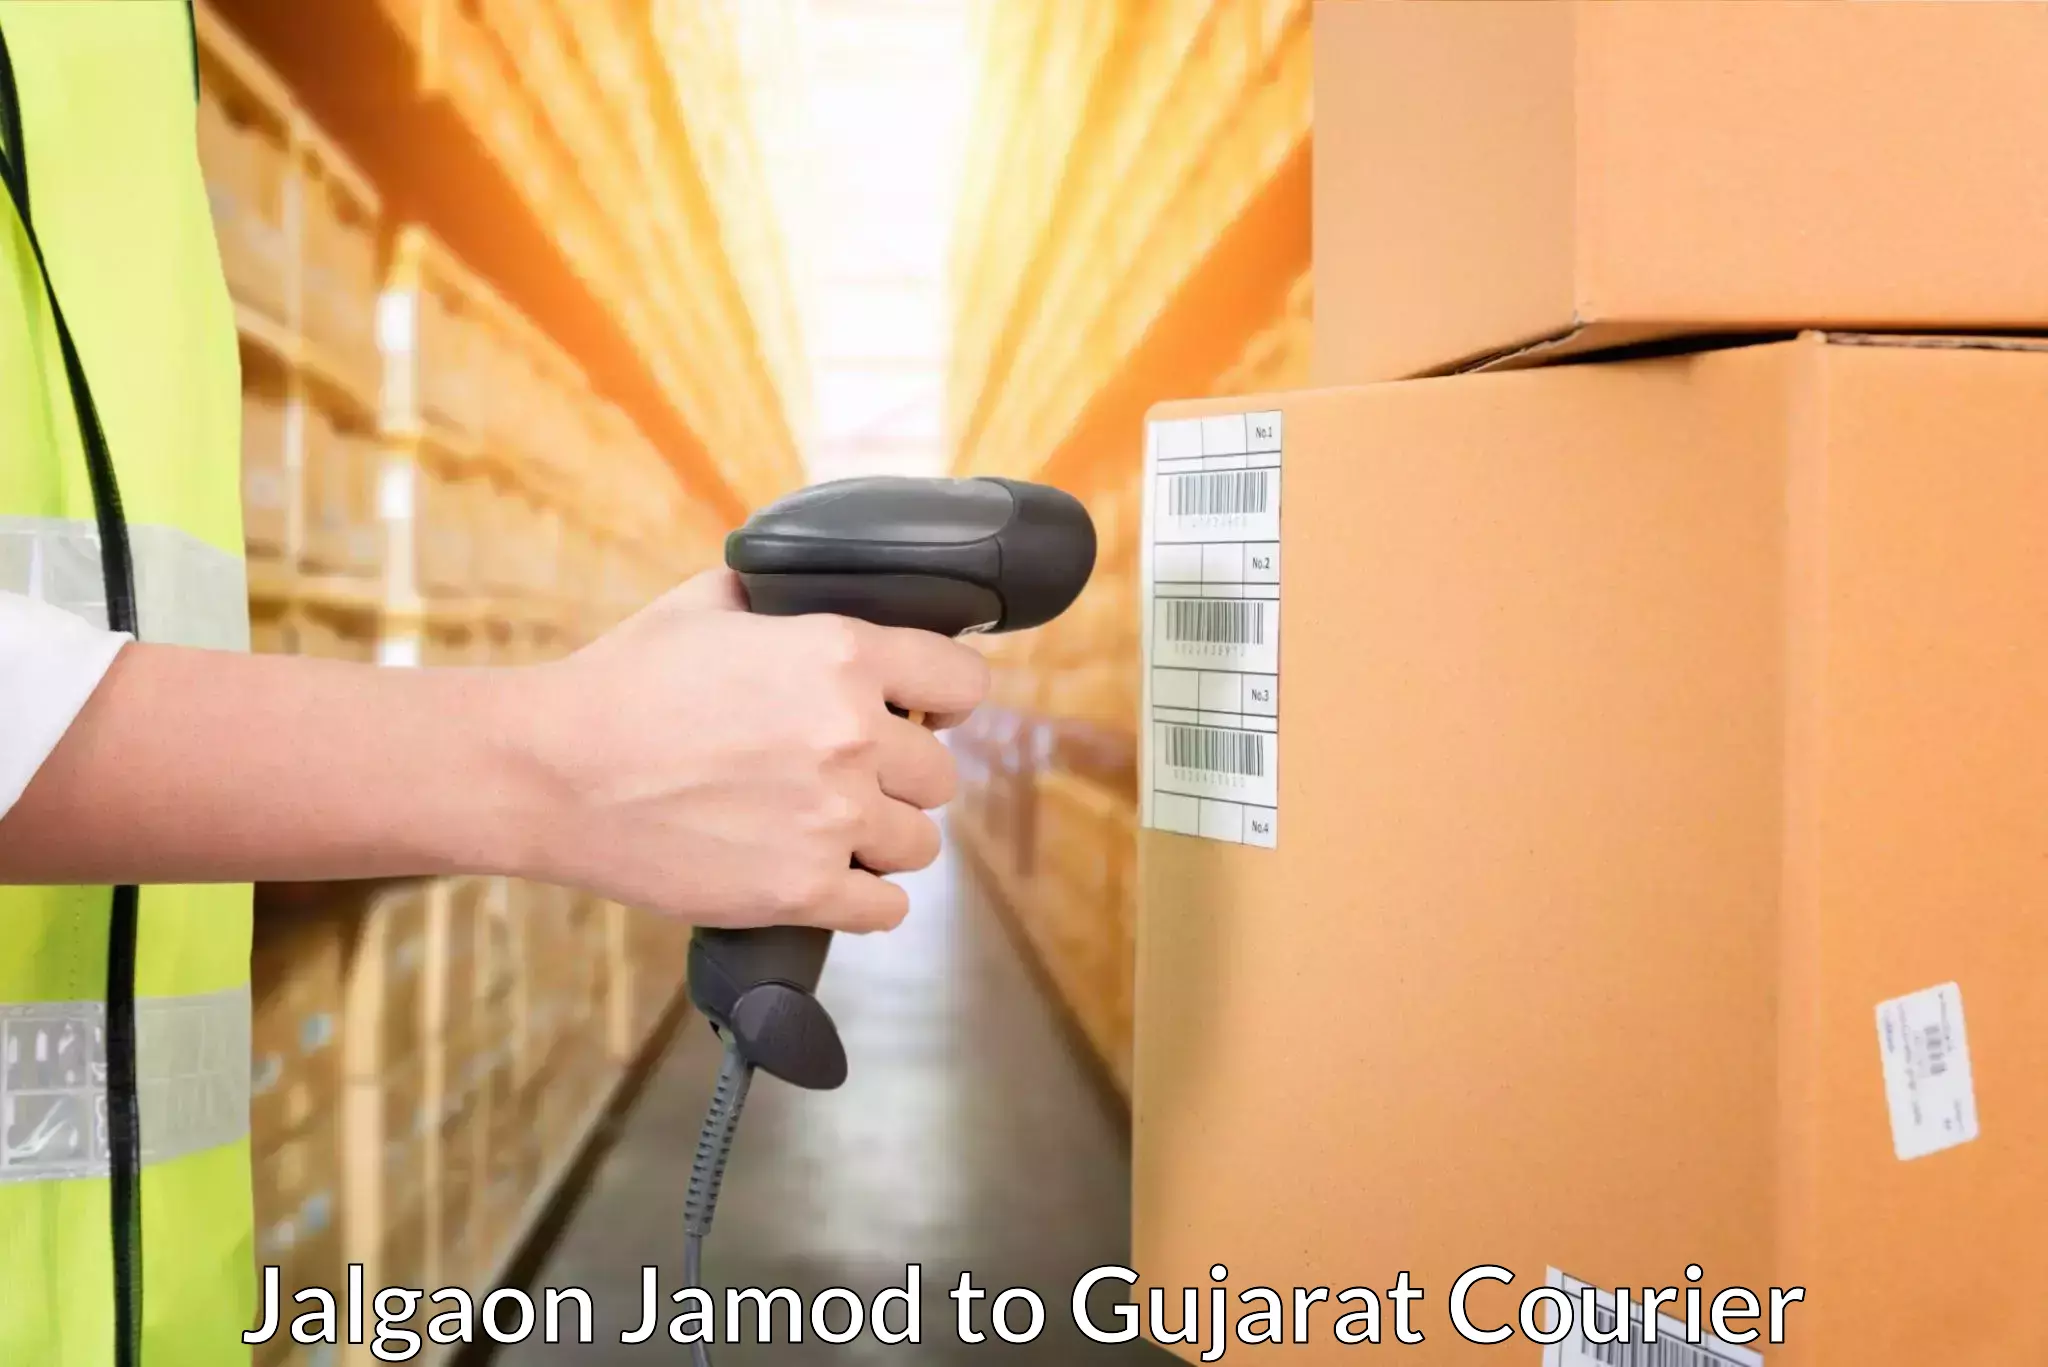 Courier service innovation Jalgaon Jamod to Sabarkantha